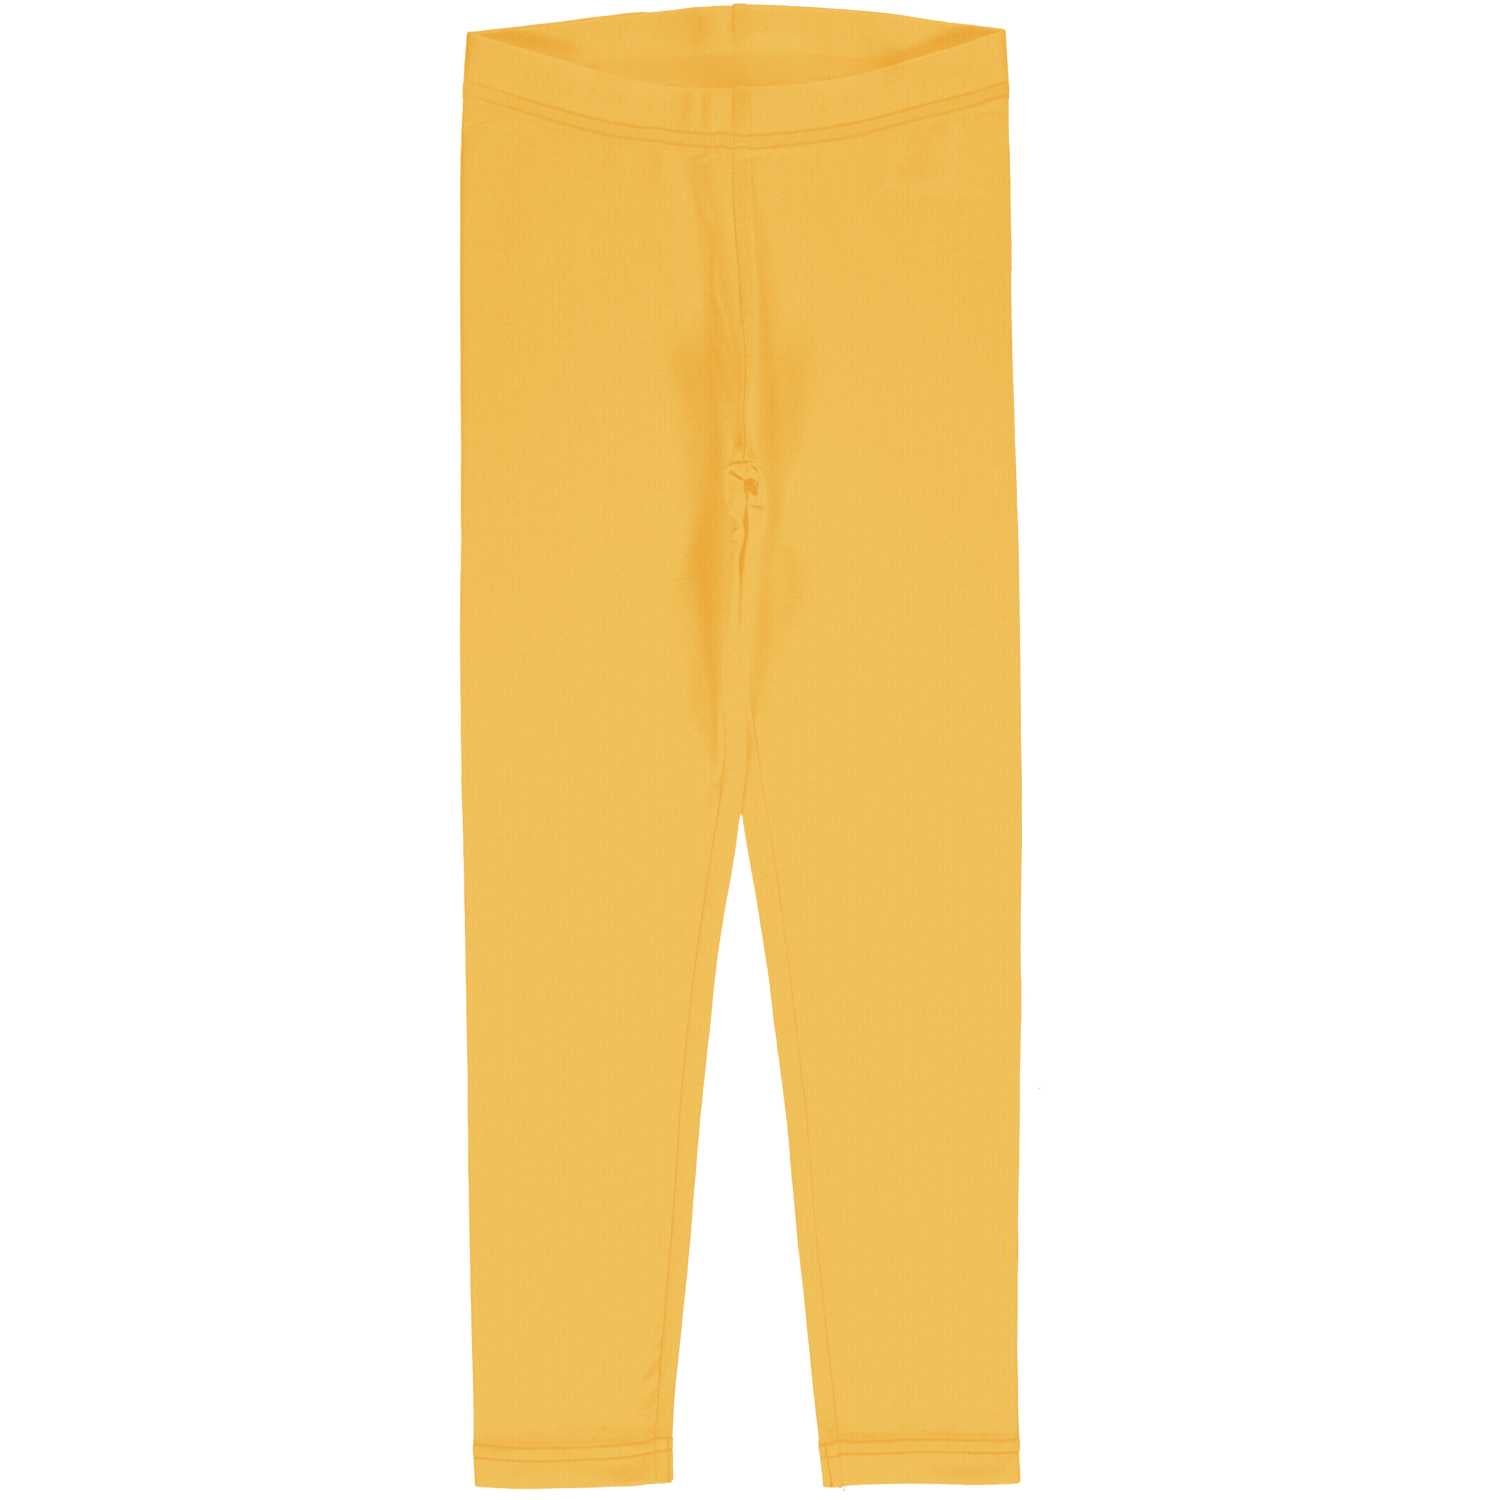 Maxomorra Leggings Solid Yellow Sun